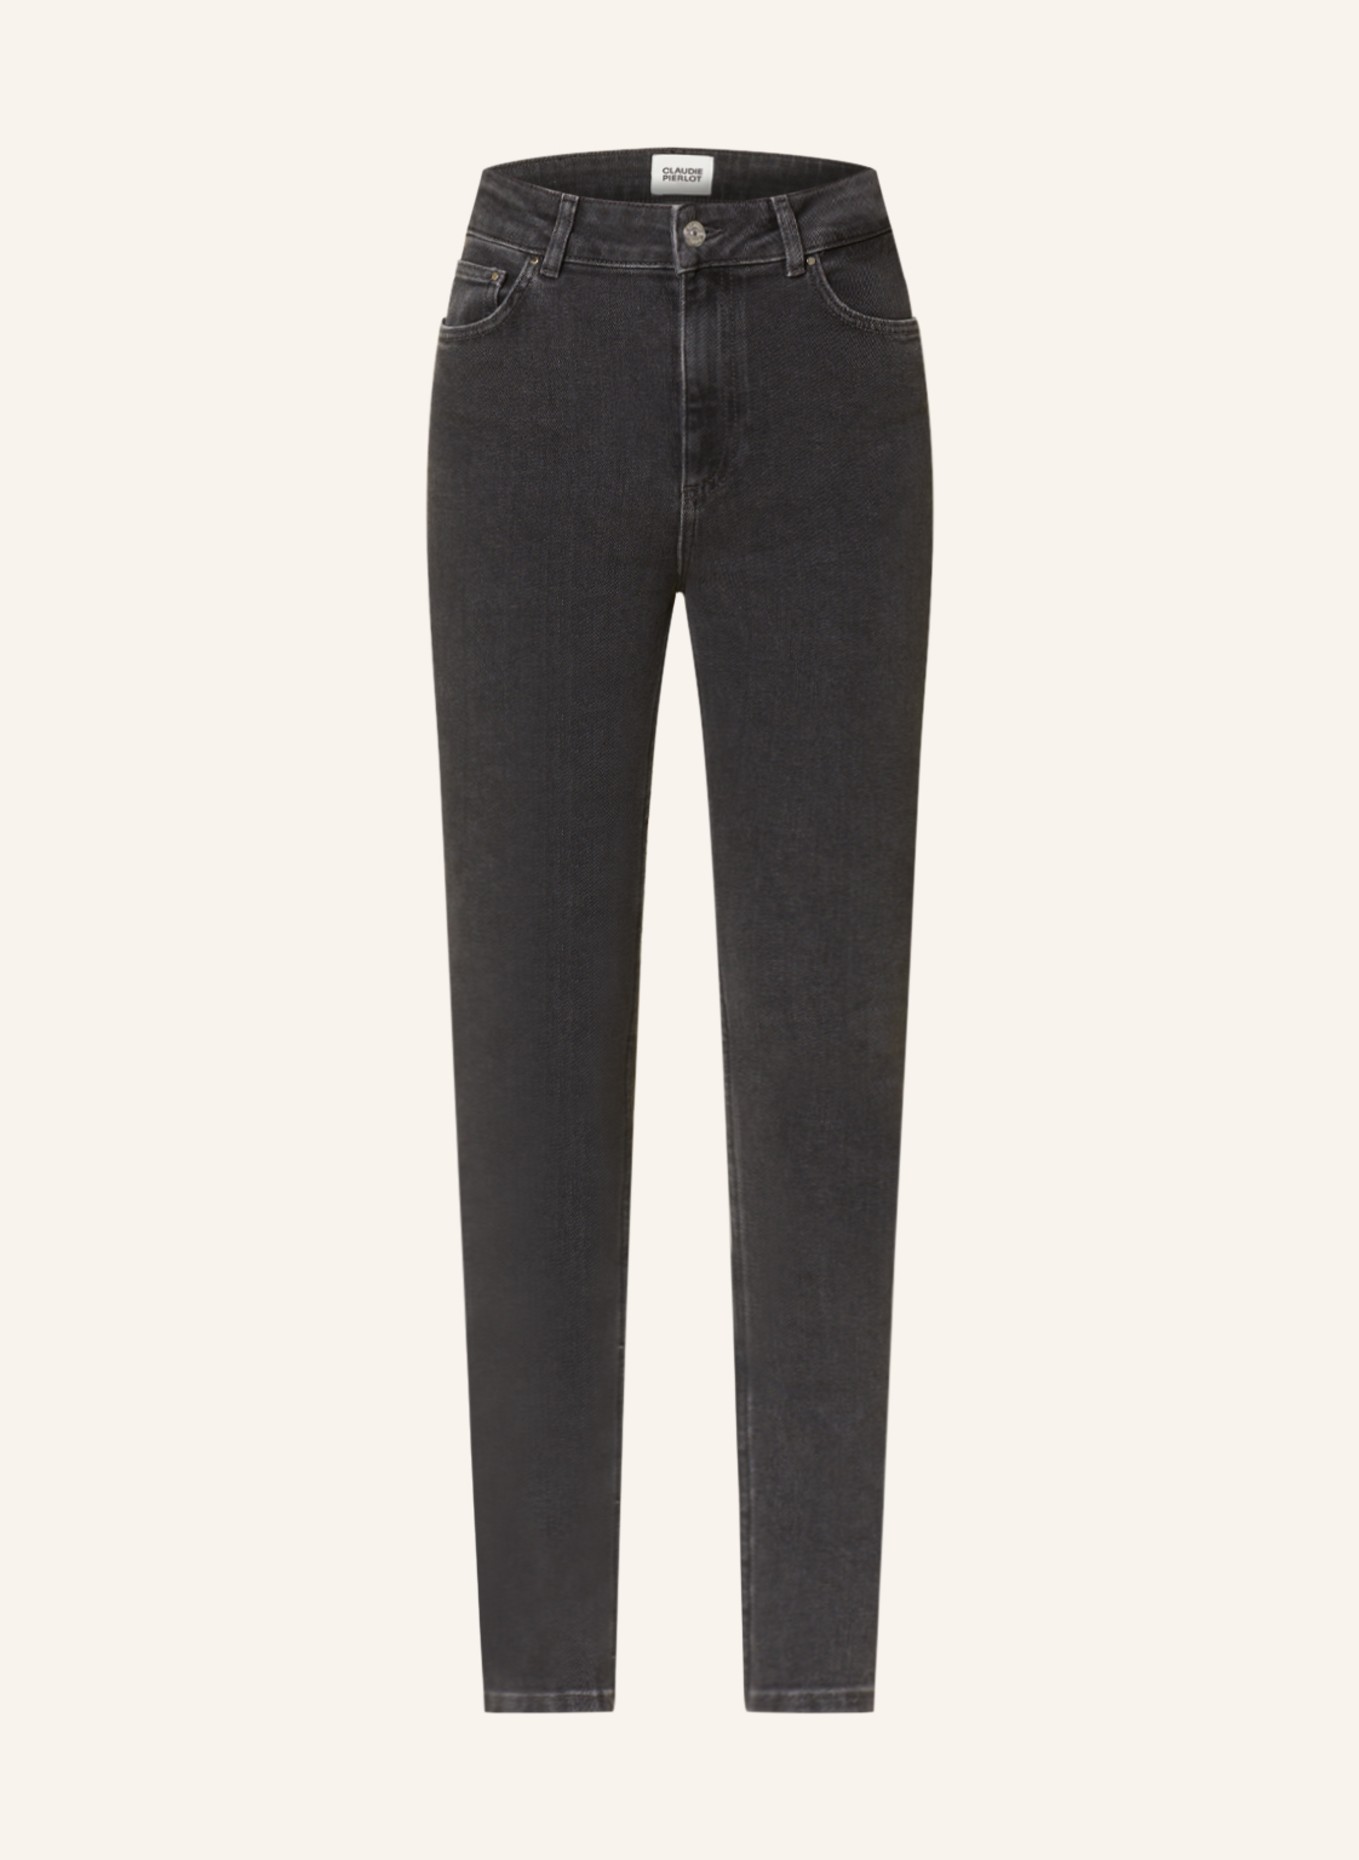 CLAUDIE PIERLOT Skinny Jeans, Farbe: J013 CHARCOAL JEANS (Bild 1)